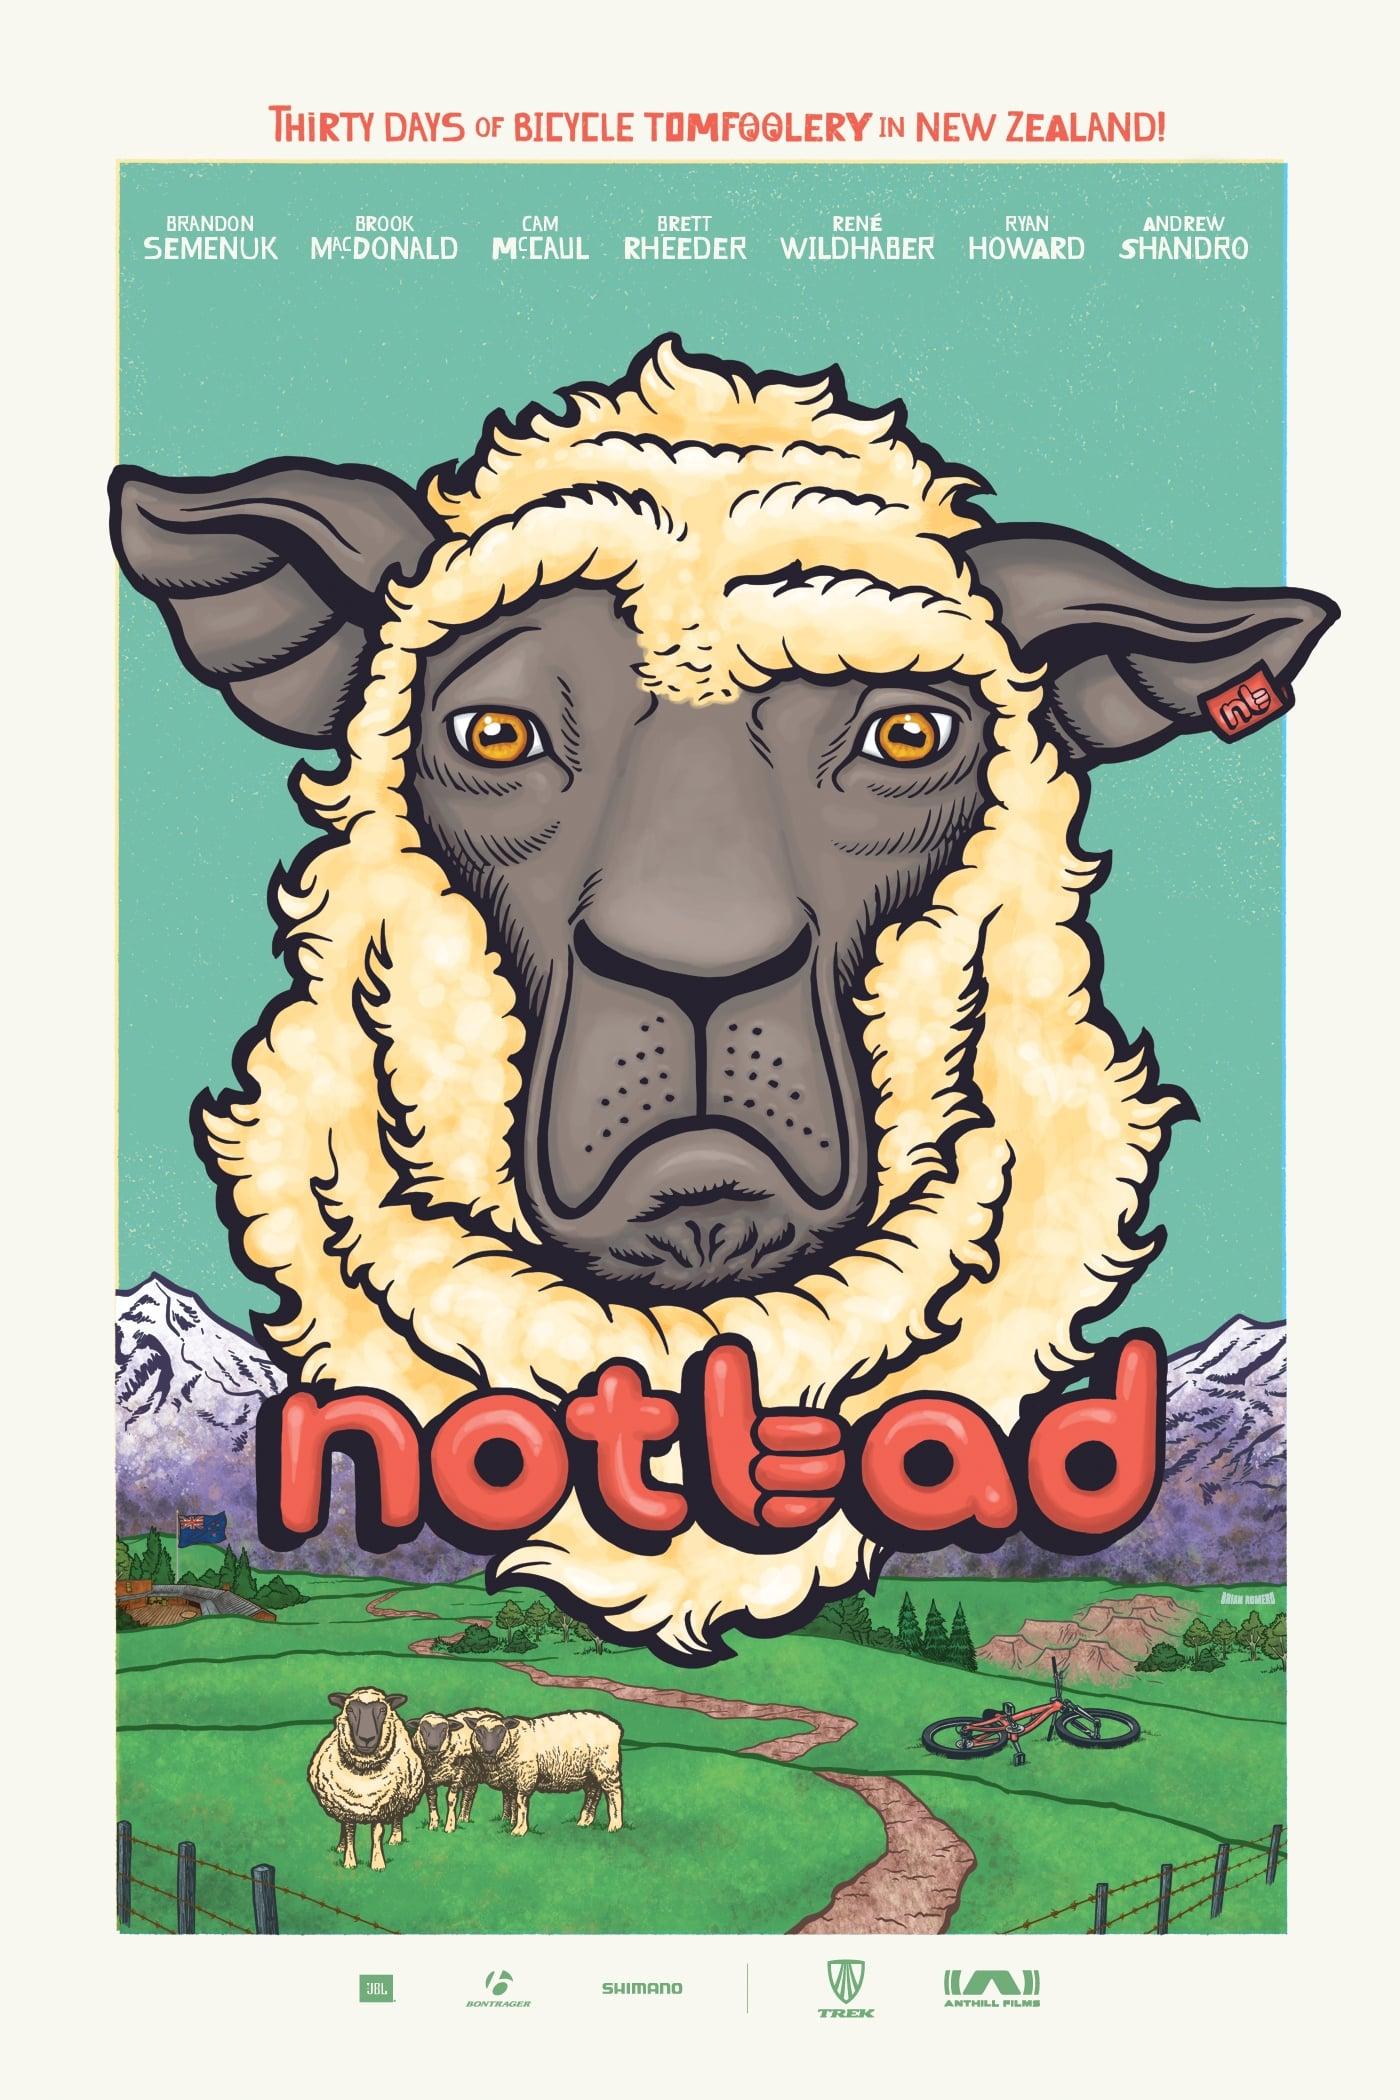 NotBad poster